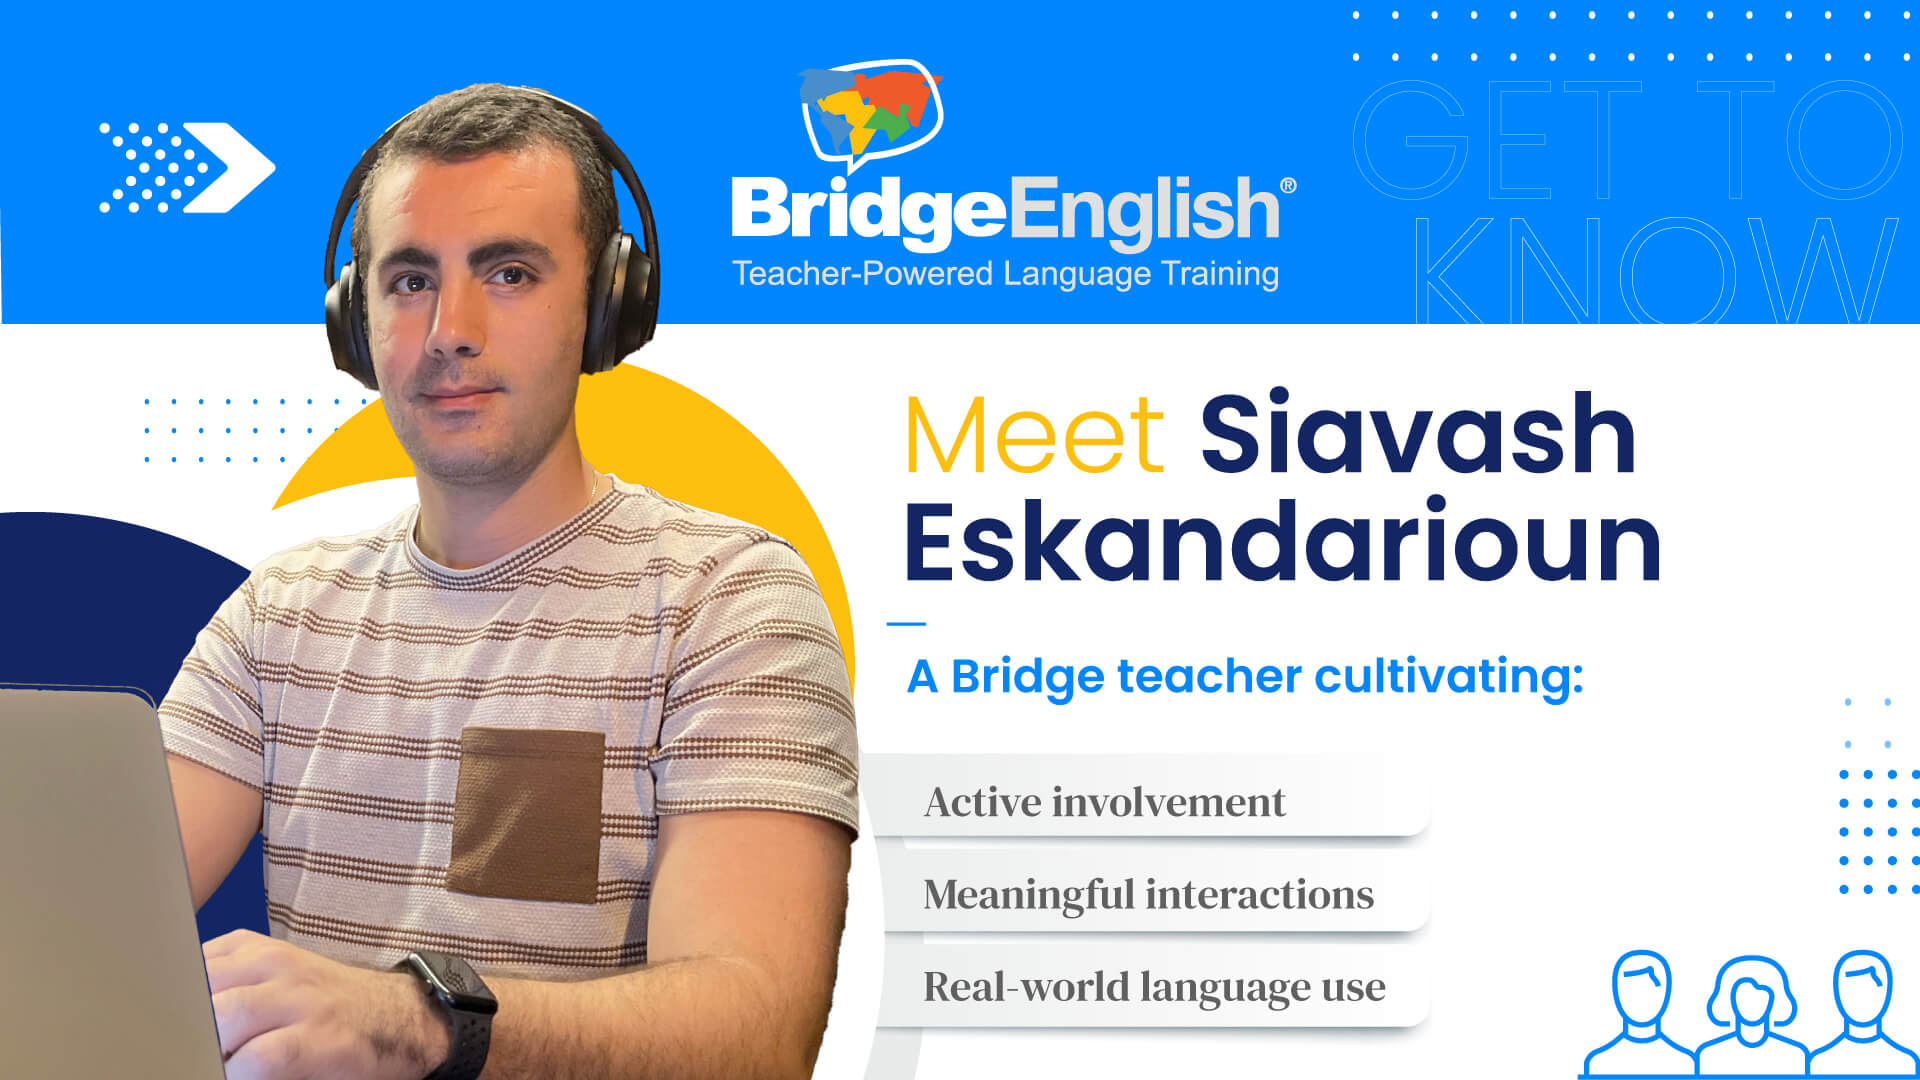 BridgeEnglish Teacher Siavash Eskandarioun: Driven to Mentor and Motivate